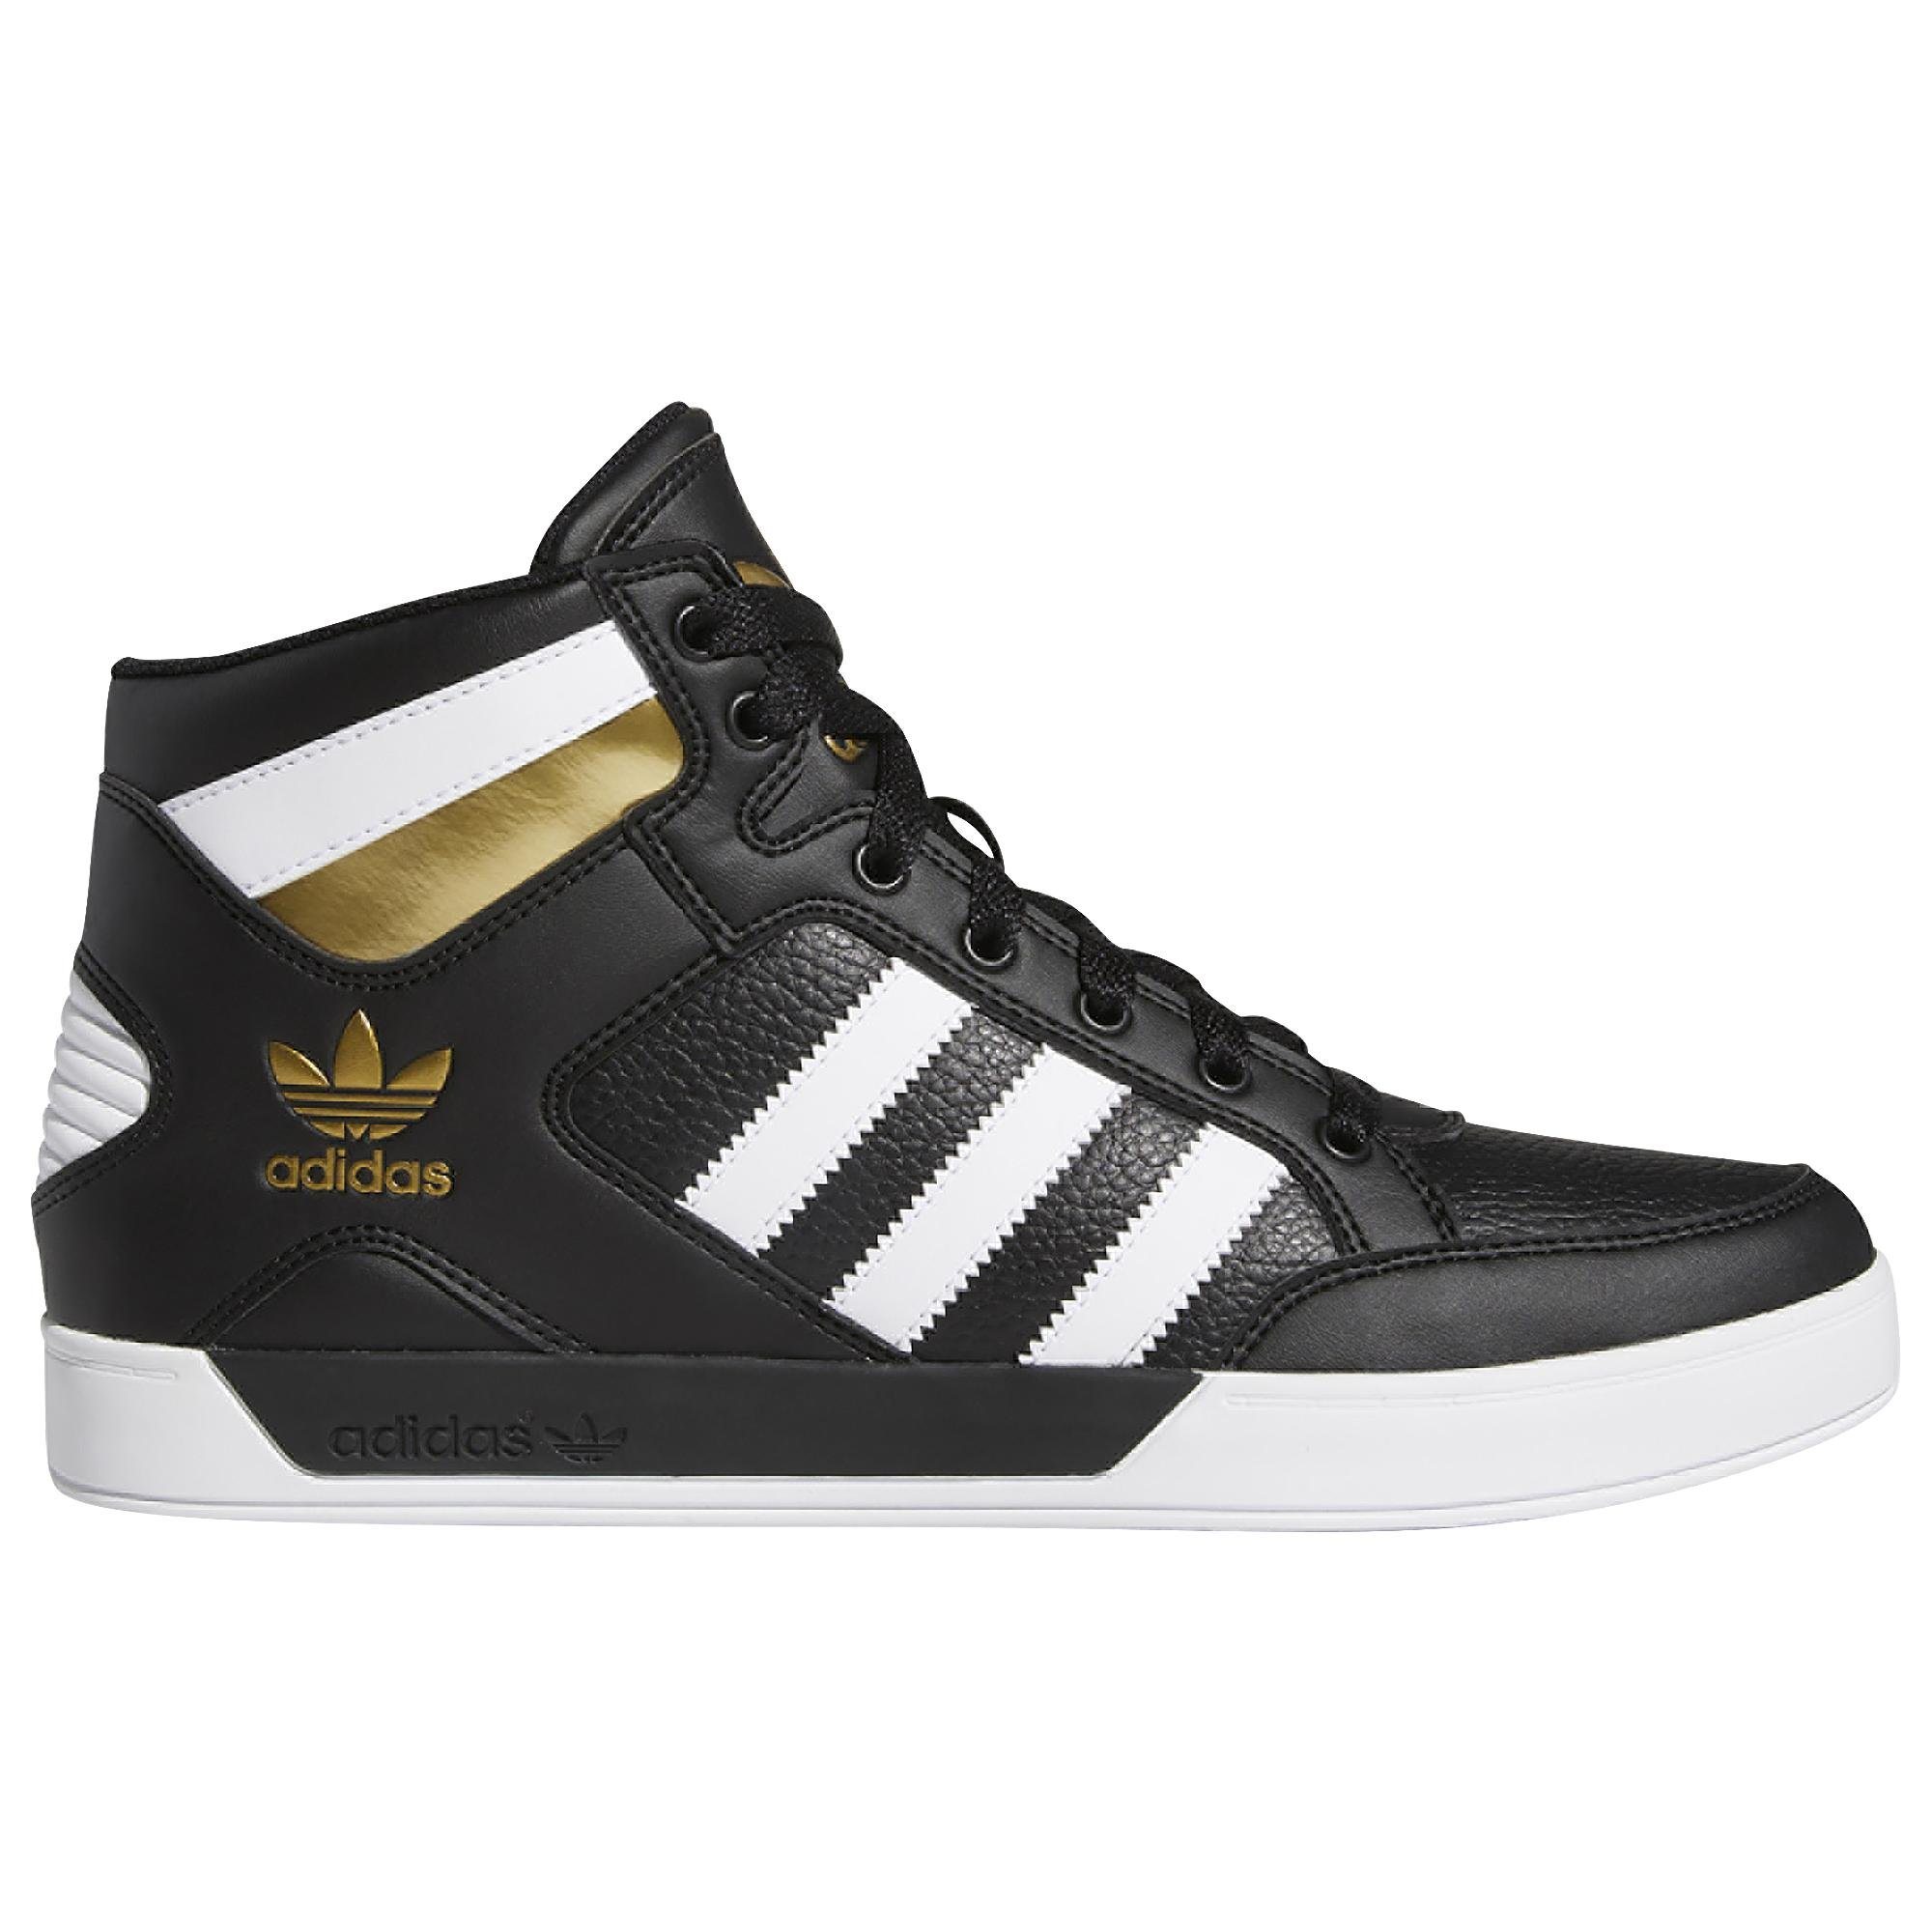 adidas Originals Leather Hardcourt Basketball Shoes in Black/White Gold ...